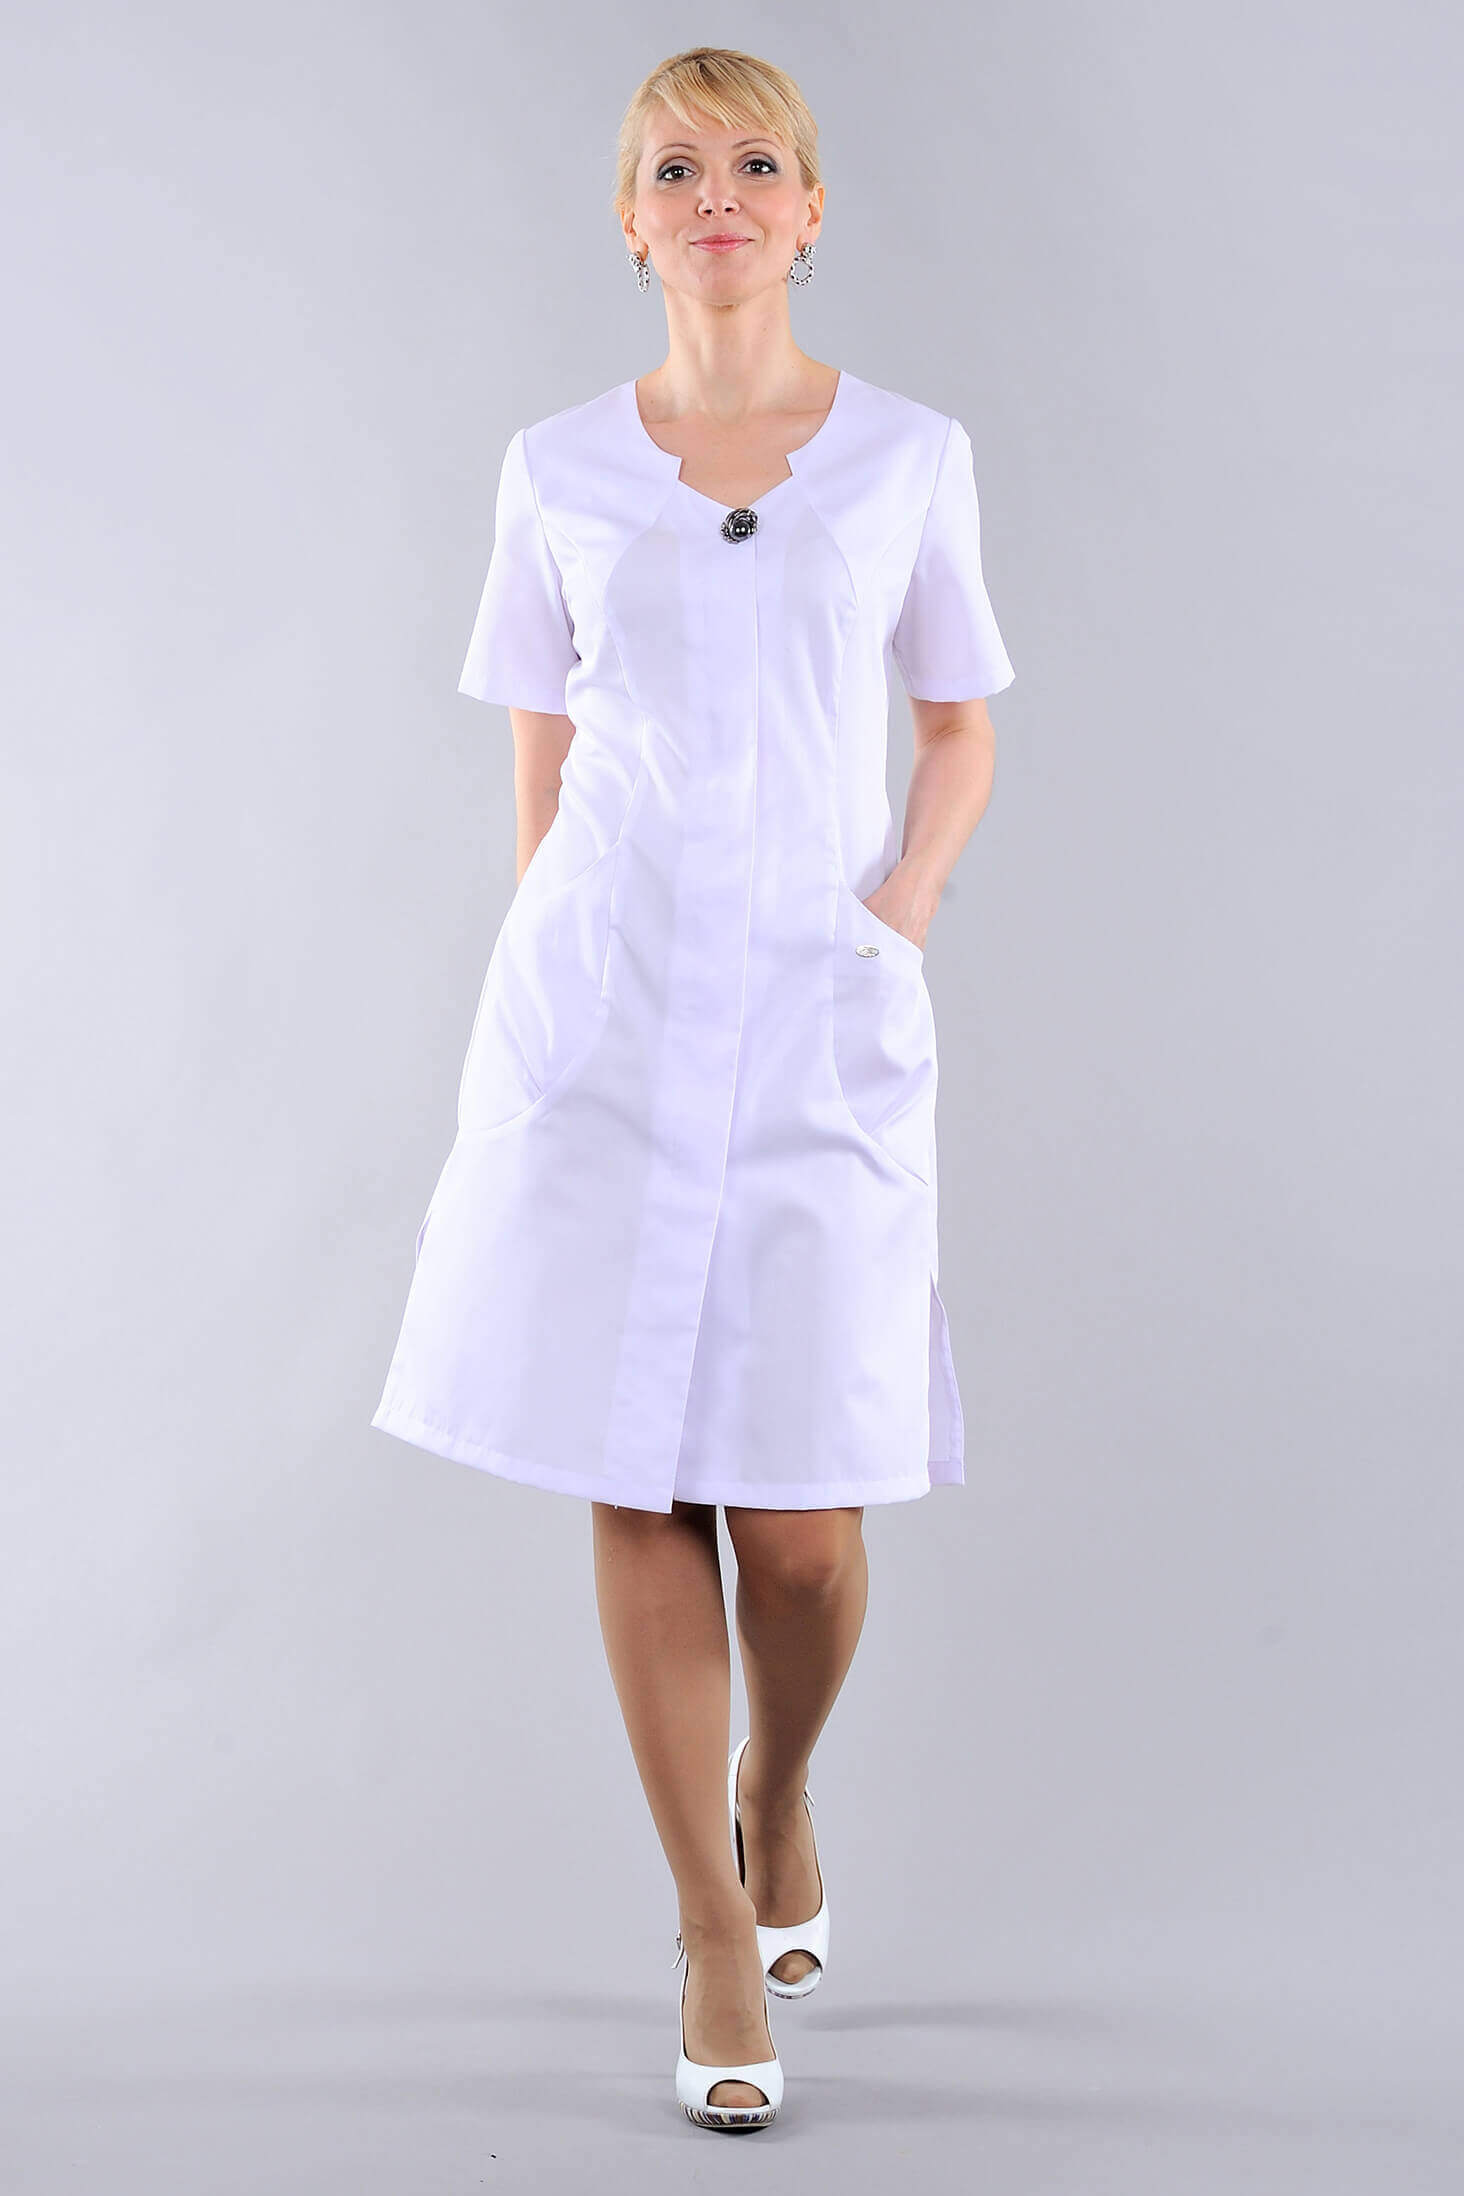 Медсестра в коротком халате